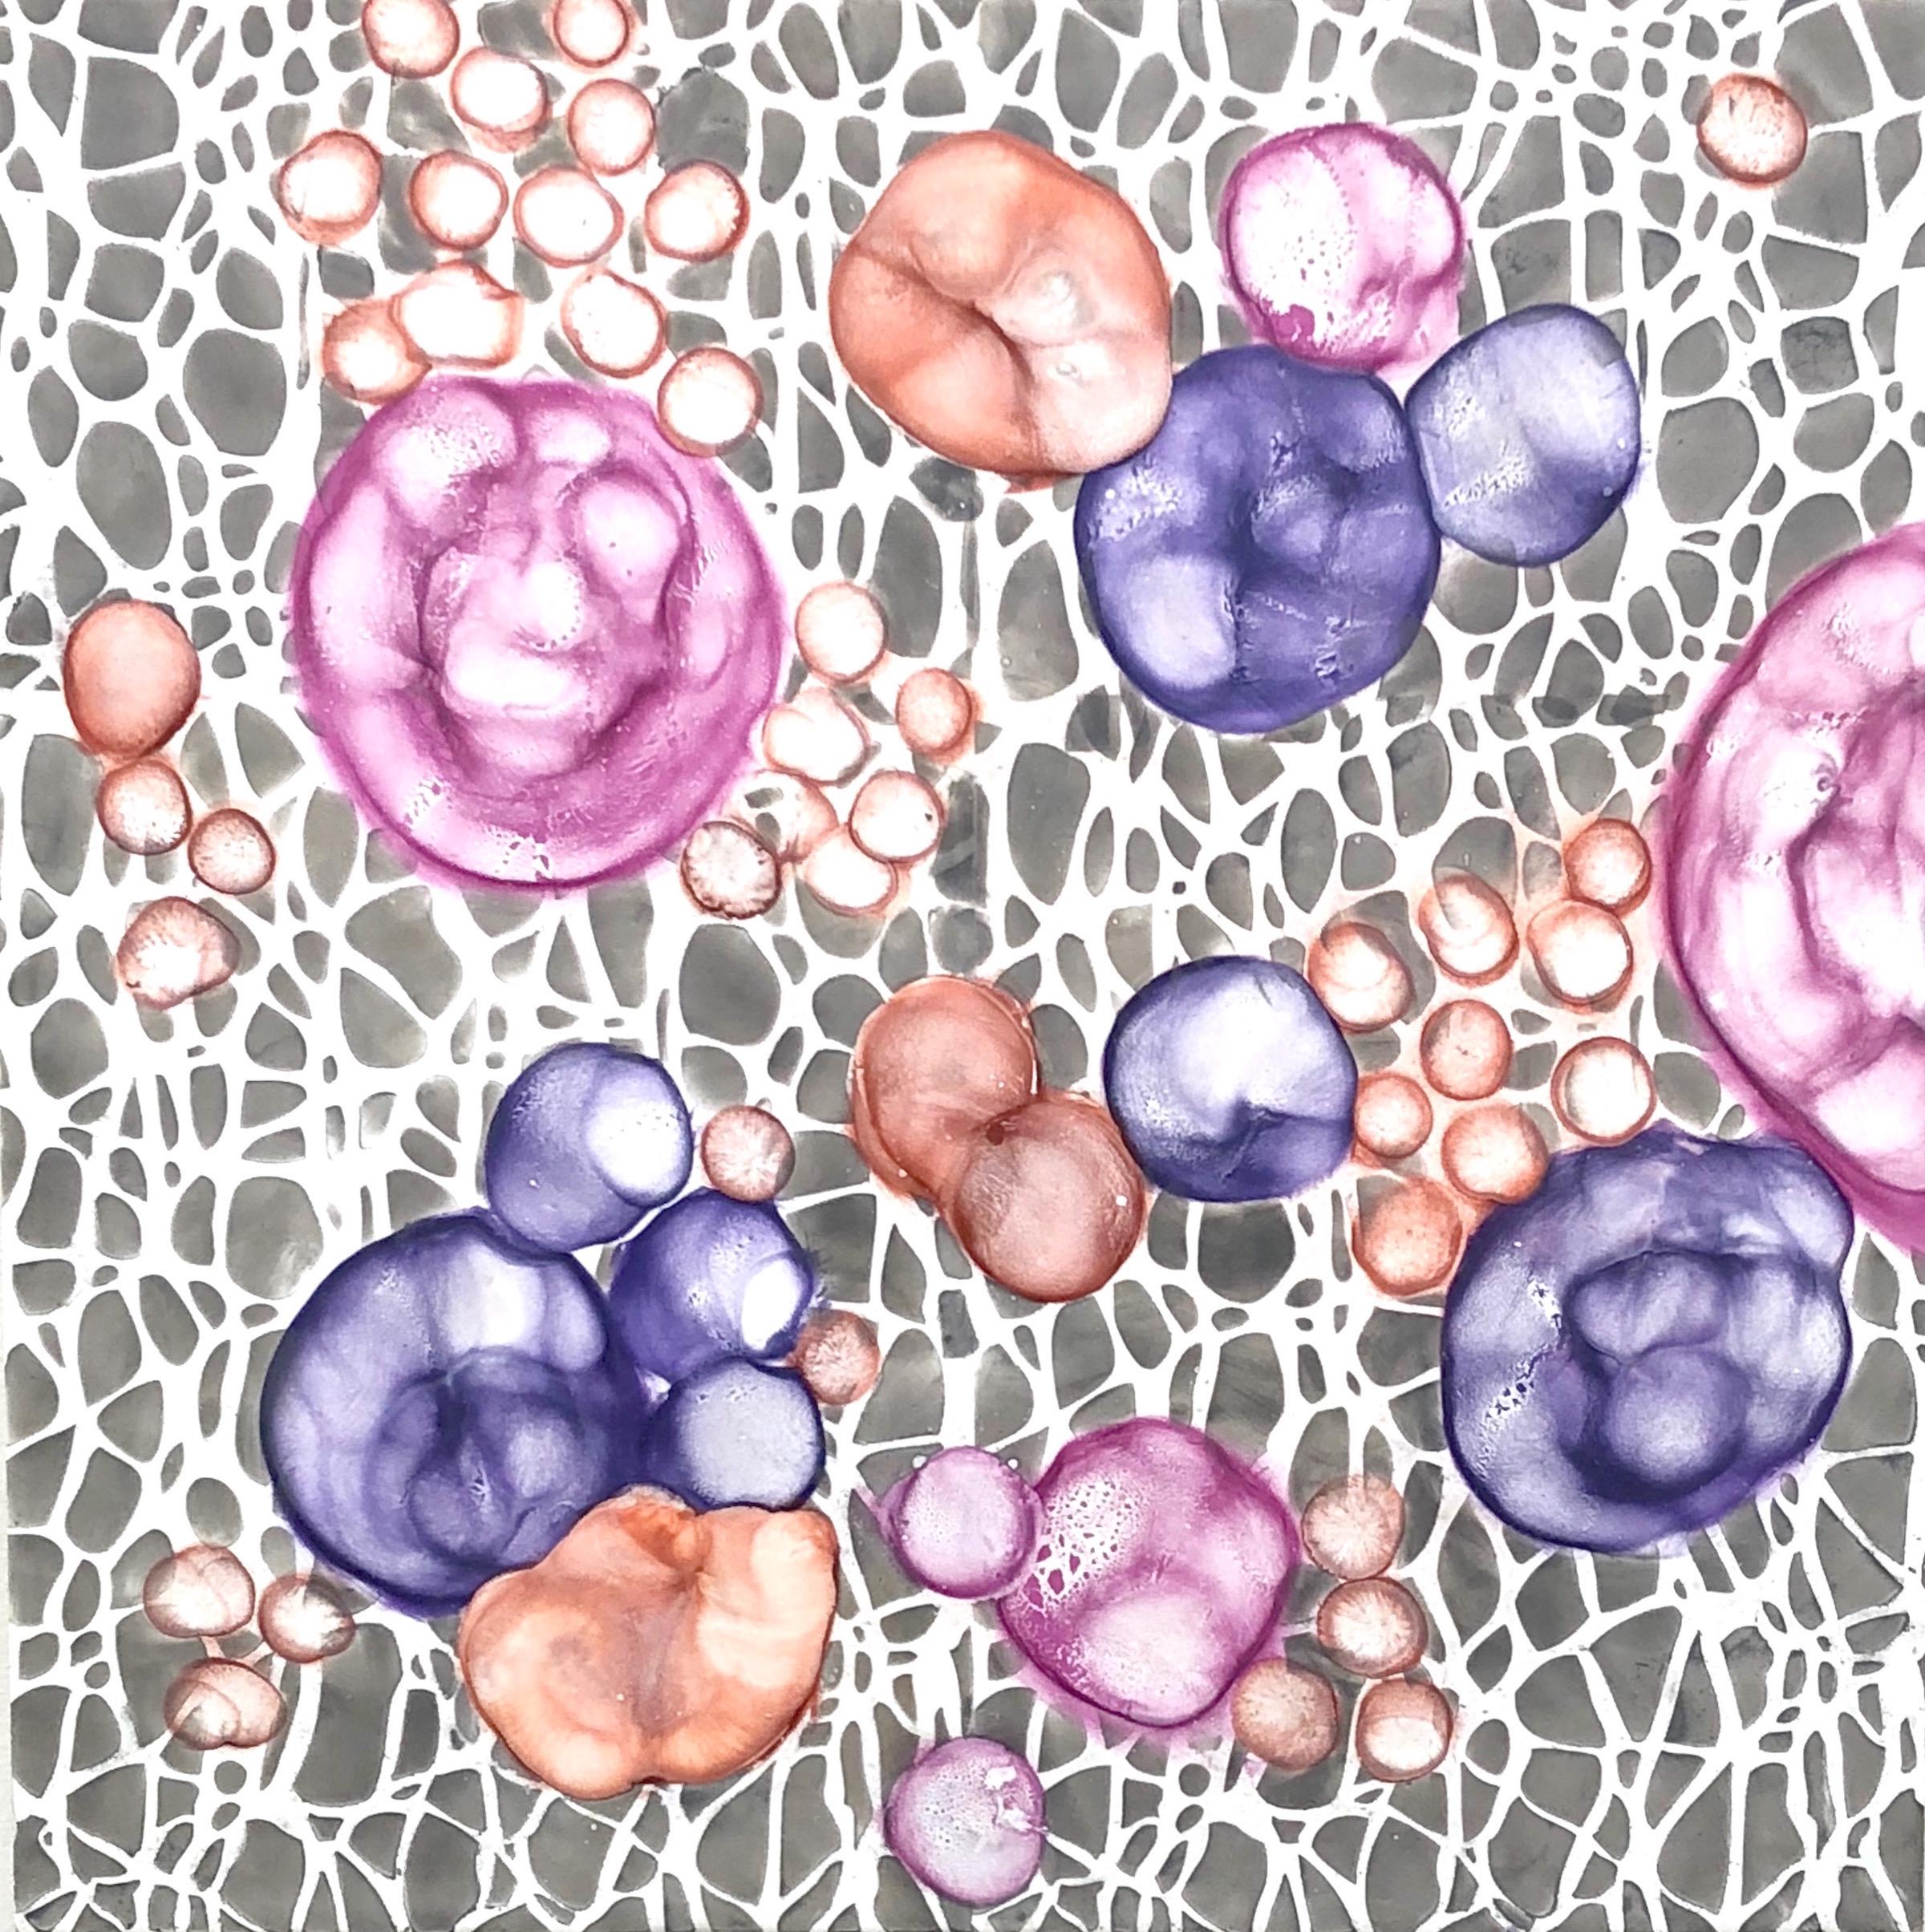 "Bio Networks 3", encaustic, pastel, abstract, microscopic, pink, purple, grey